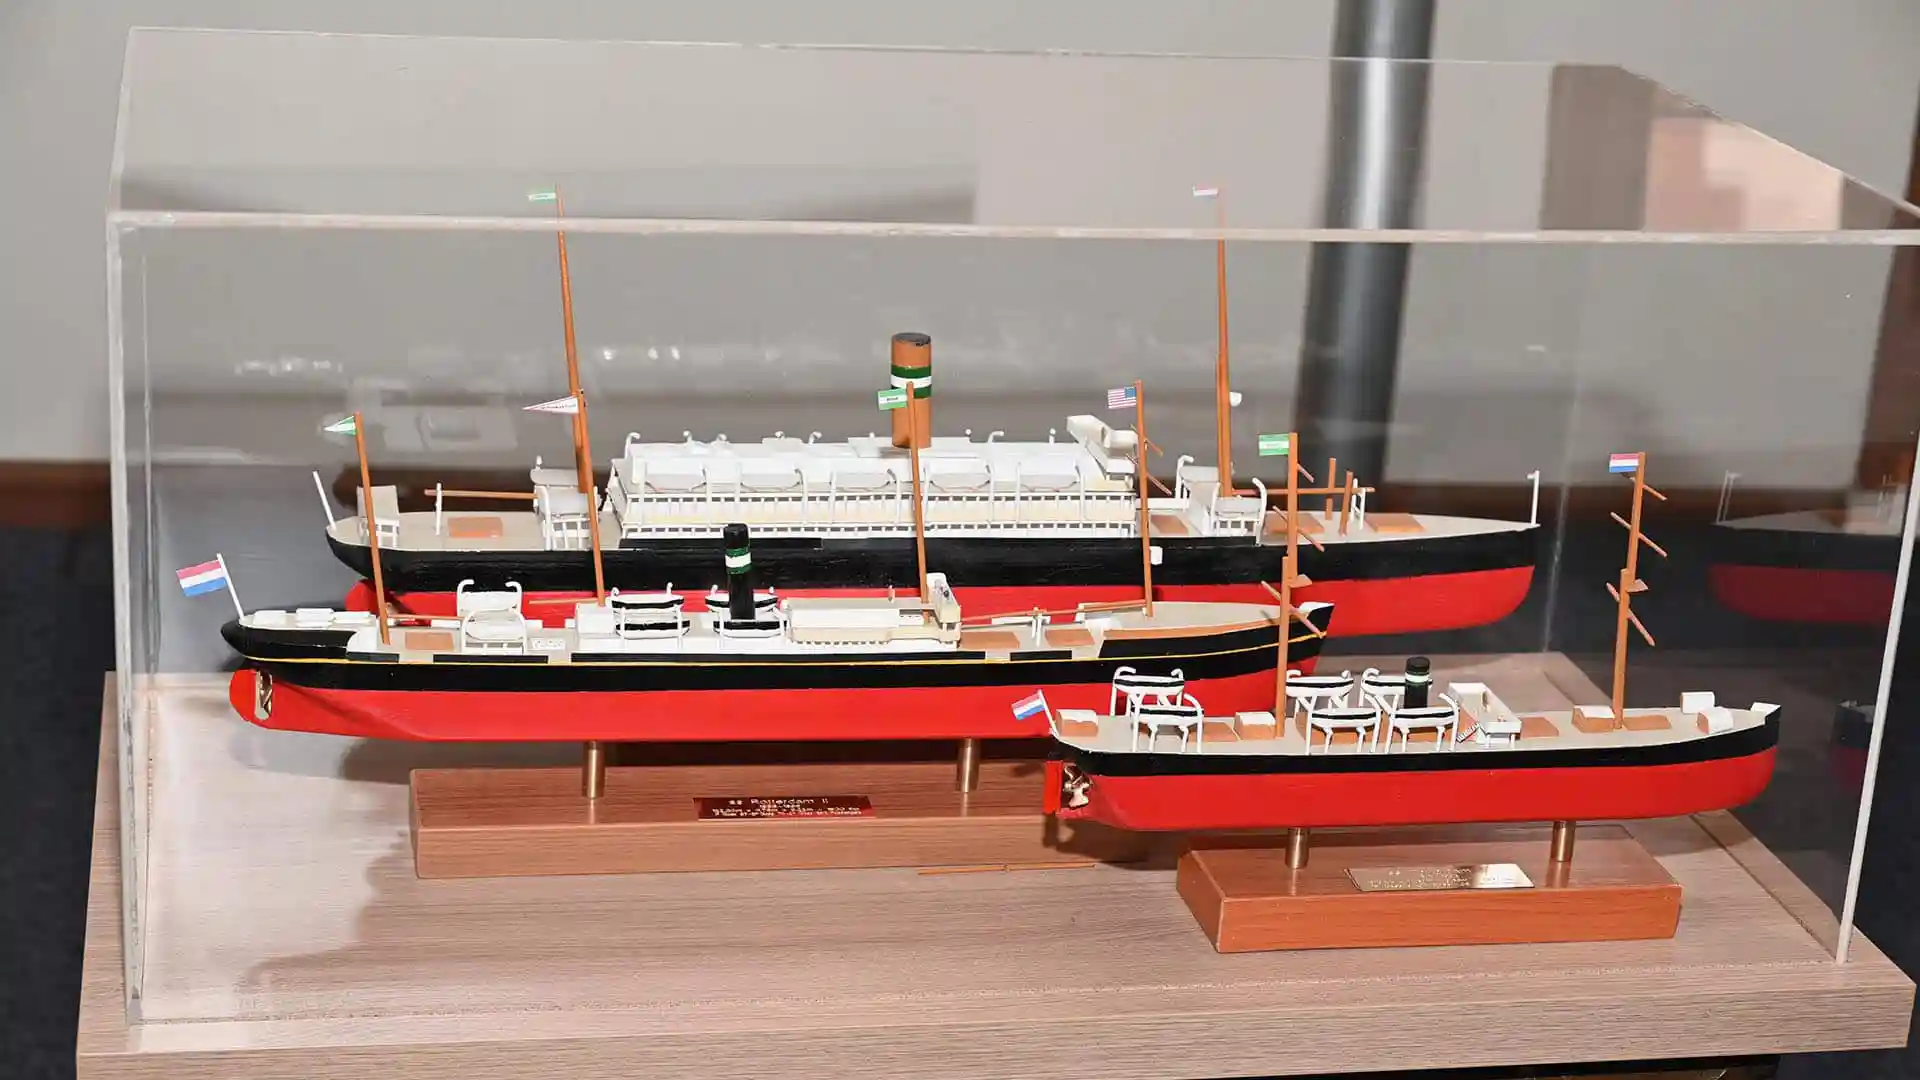 View of Holland America Line ship models at Ellis Island exhibit.